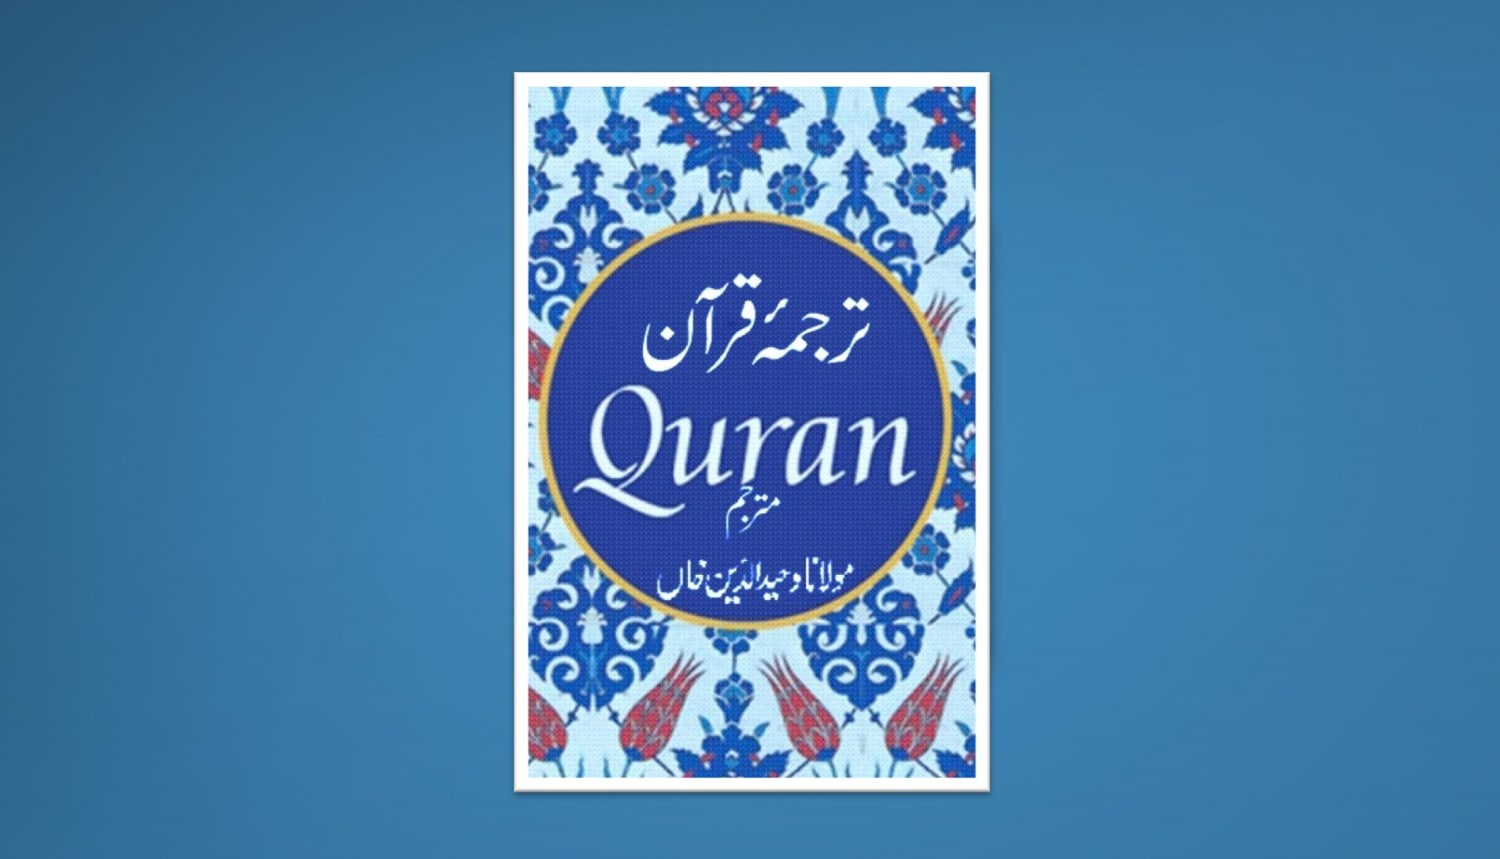 urdu translation of quran by maulana wahid uddin khan